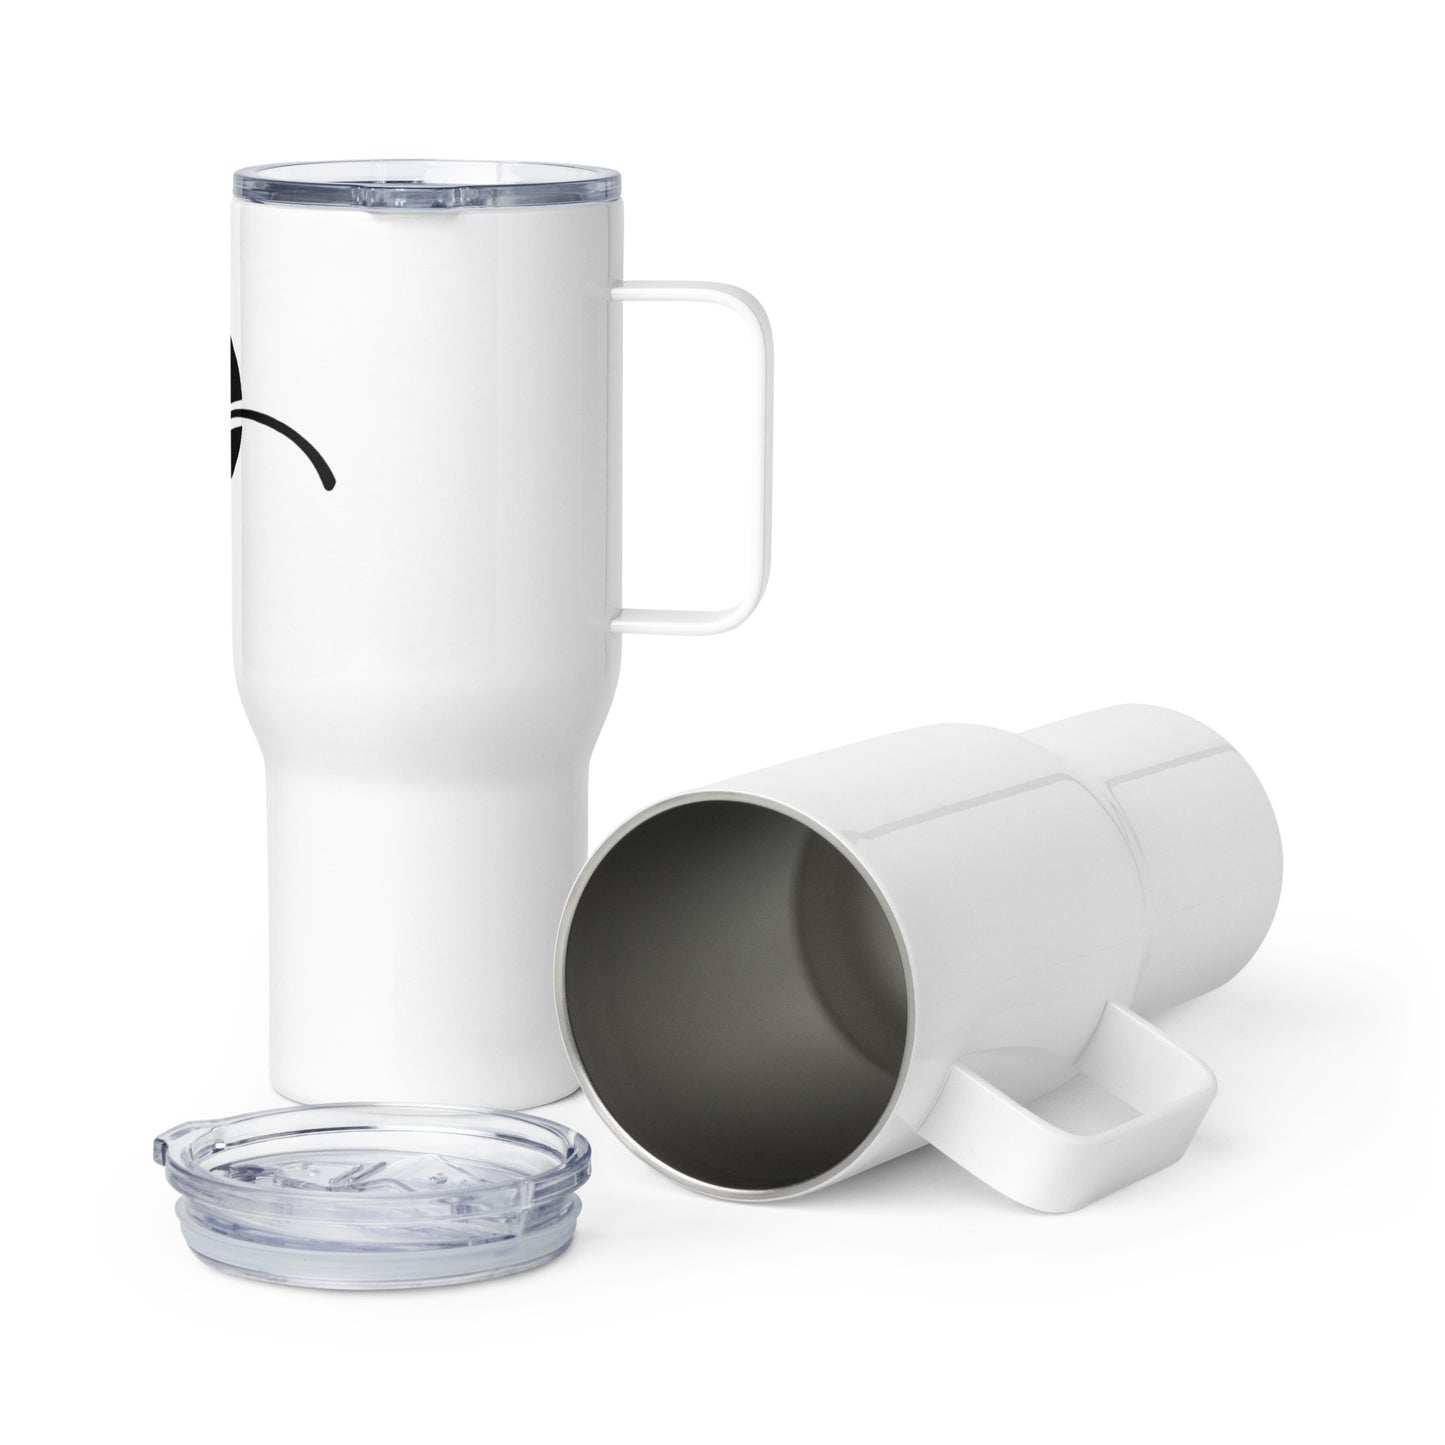 SP Travel mug with a handle